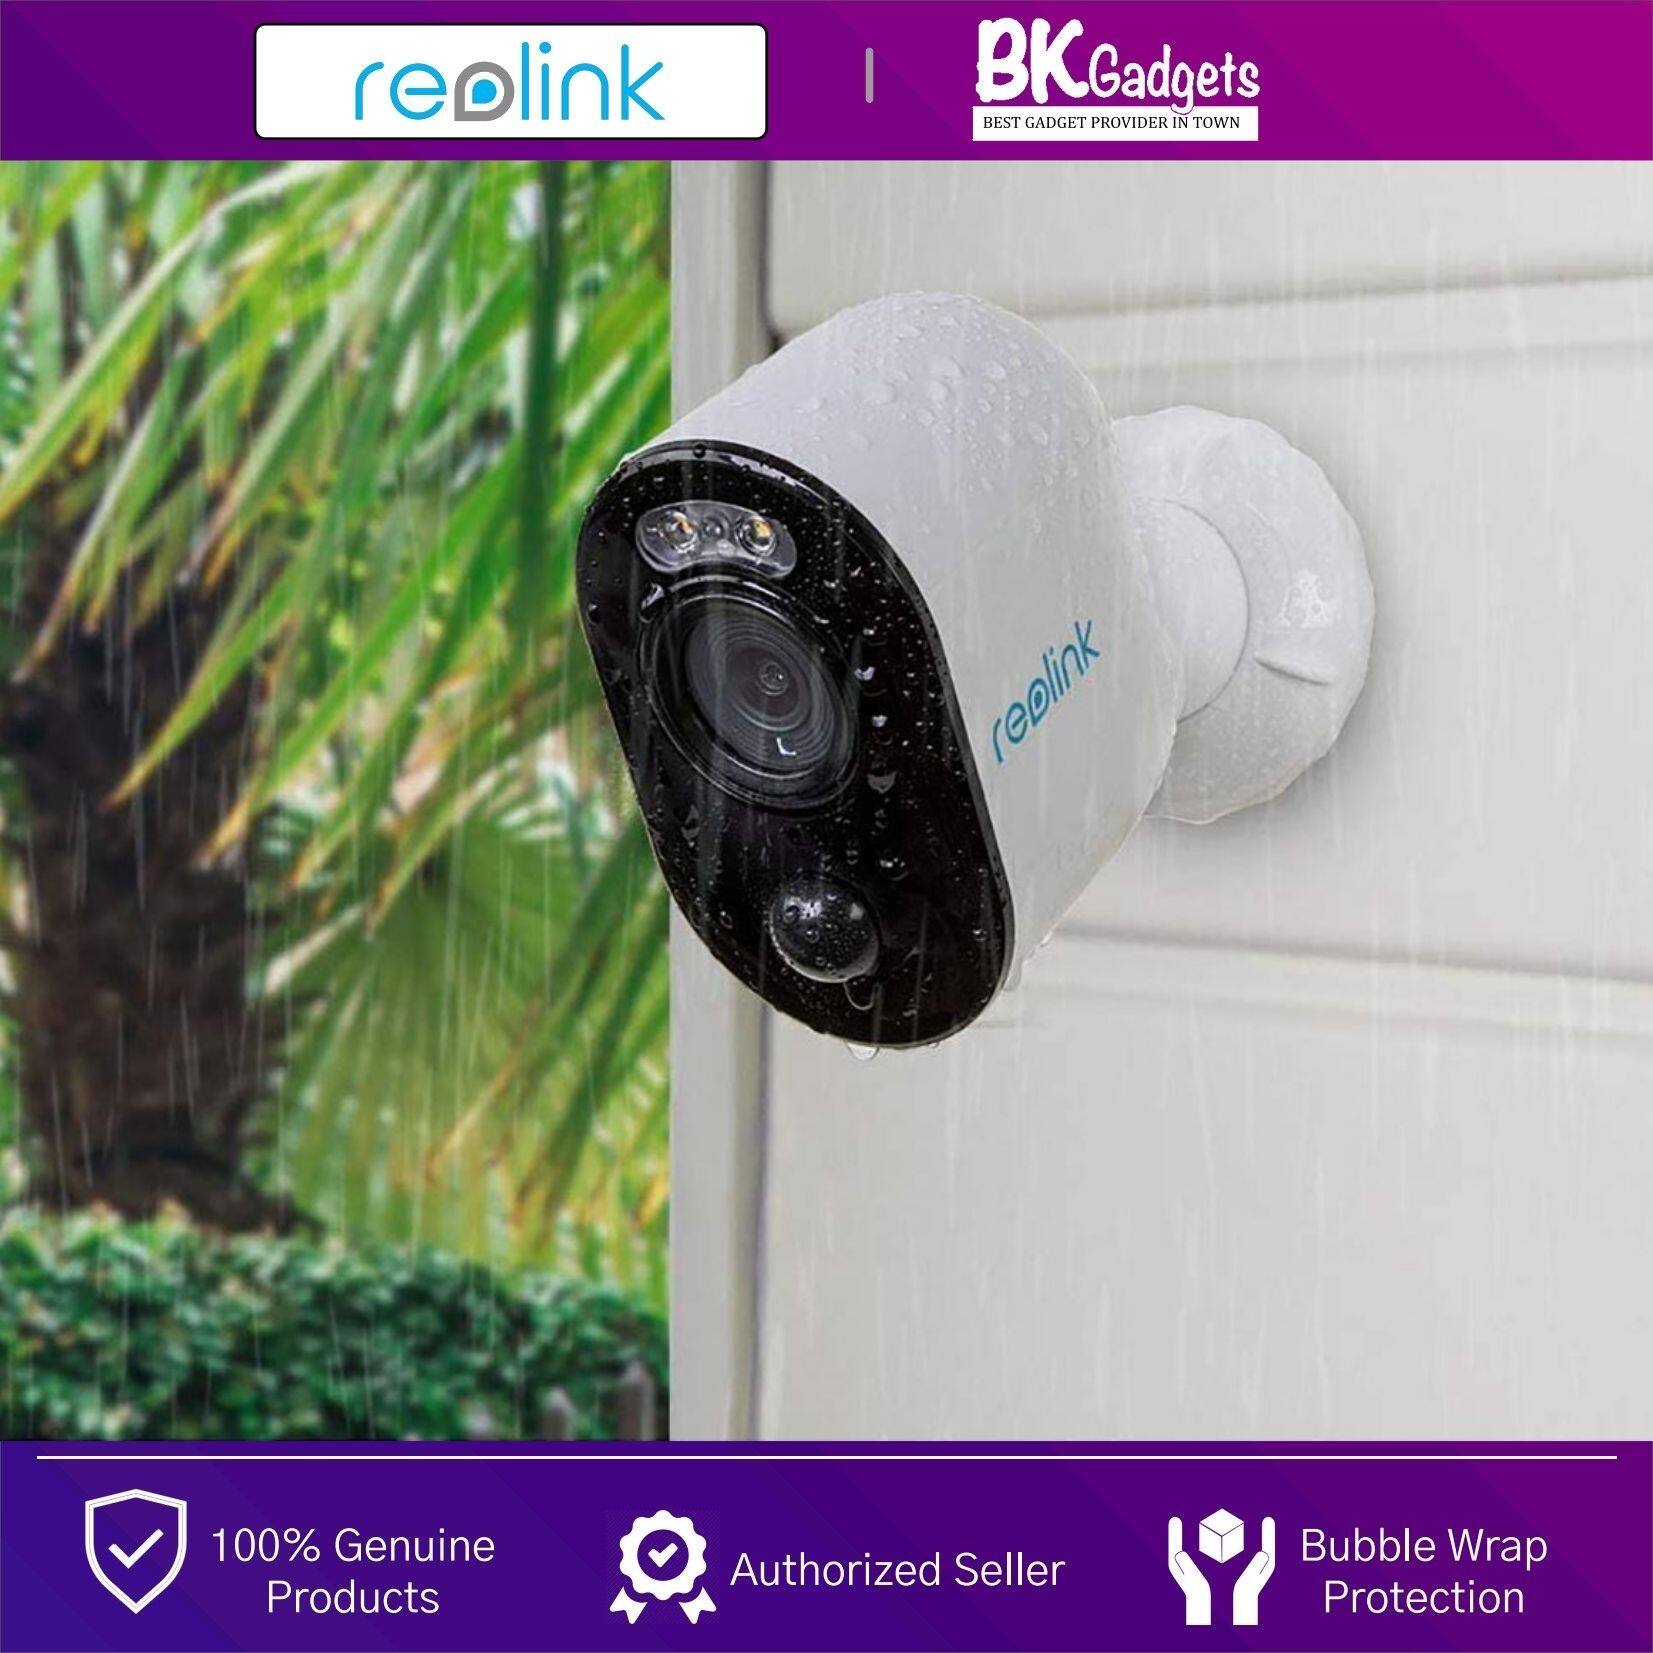 Reolink Argus 3 1080P Full HD Security IP Camera CCTV - CMOS | 120 Diagonal | 5200mAh Rechargeable Battery | 2 Way Audio | Night Vision 10m | PIR Motion Detect | Outdoor IP65